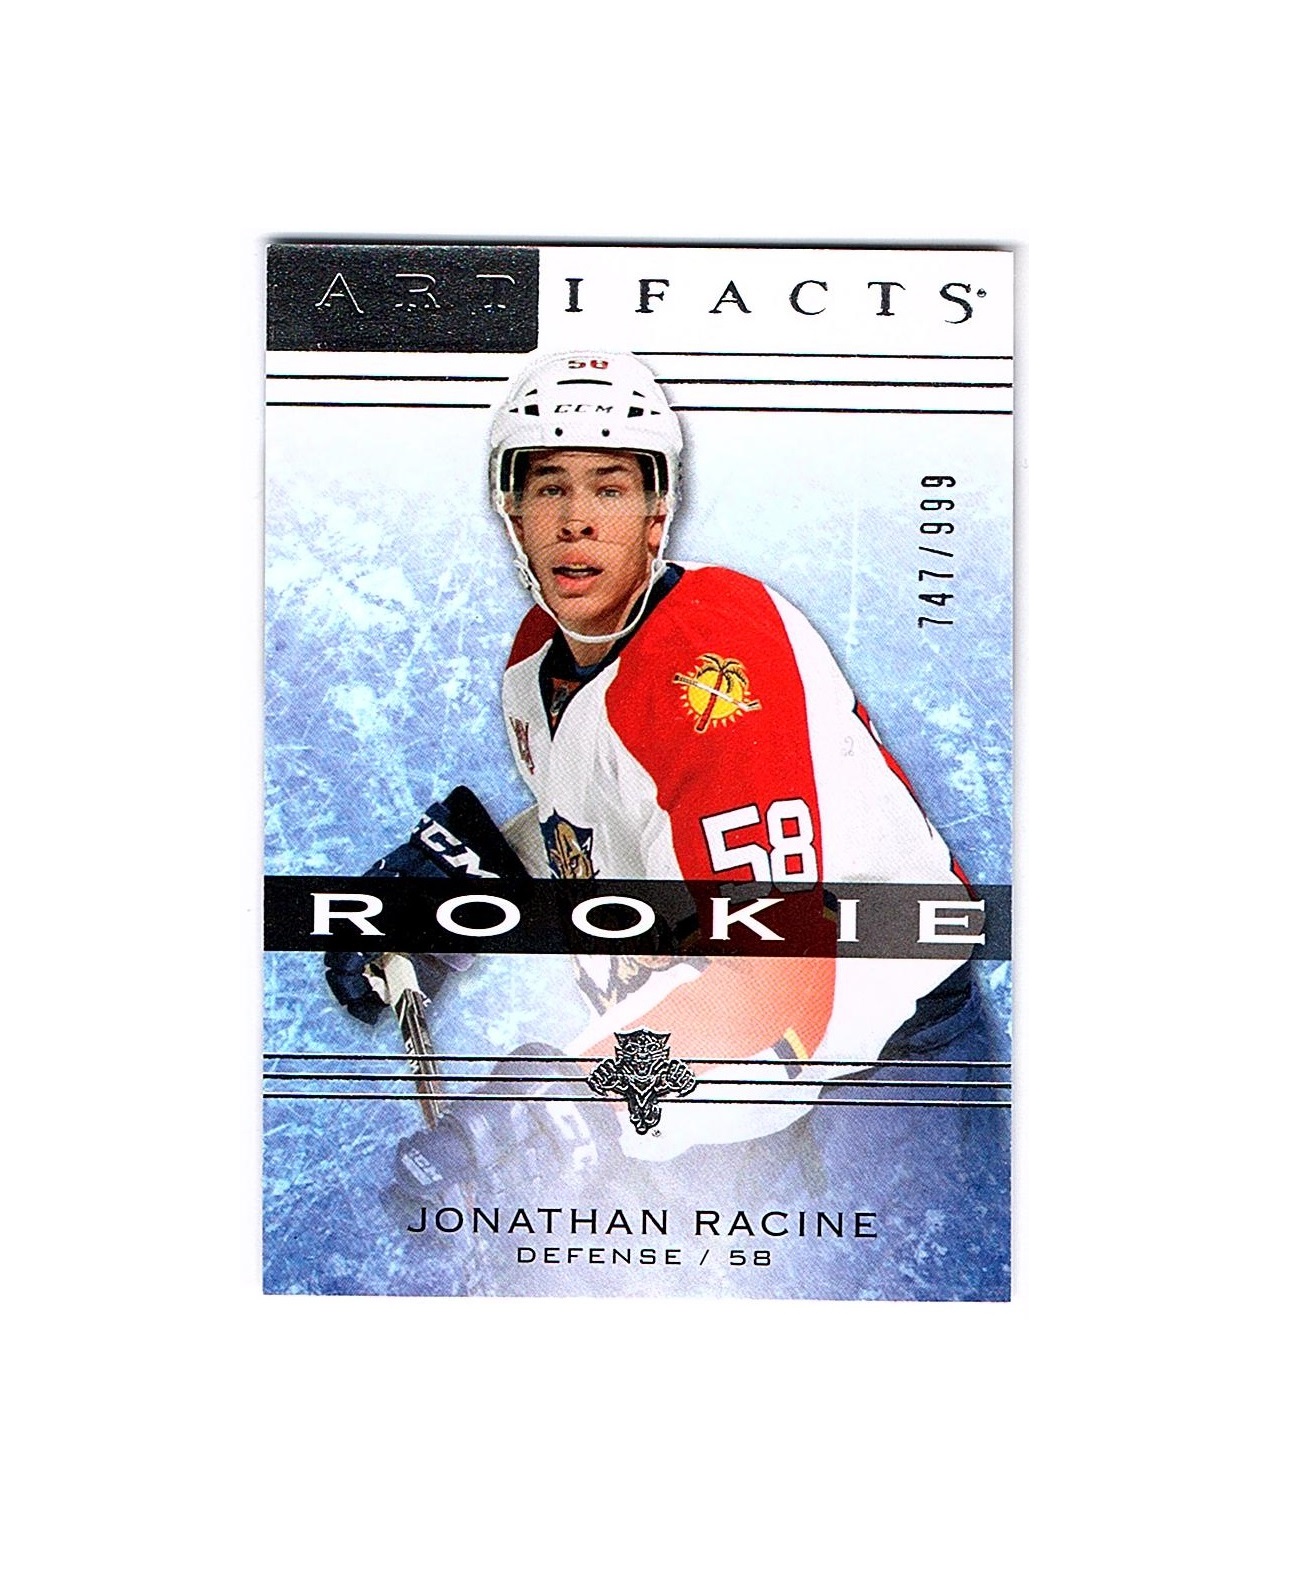 2014-15 Artifacts #134 Jonathan Racine RC (15-X6-NHLPANTHERS)